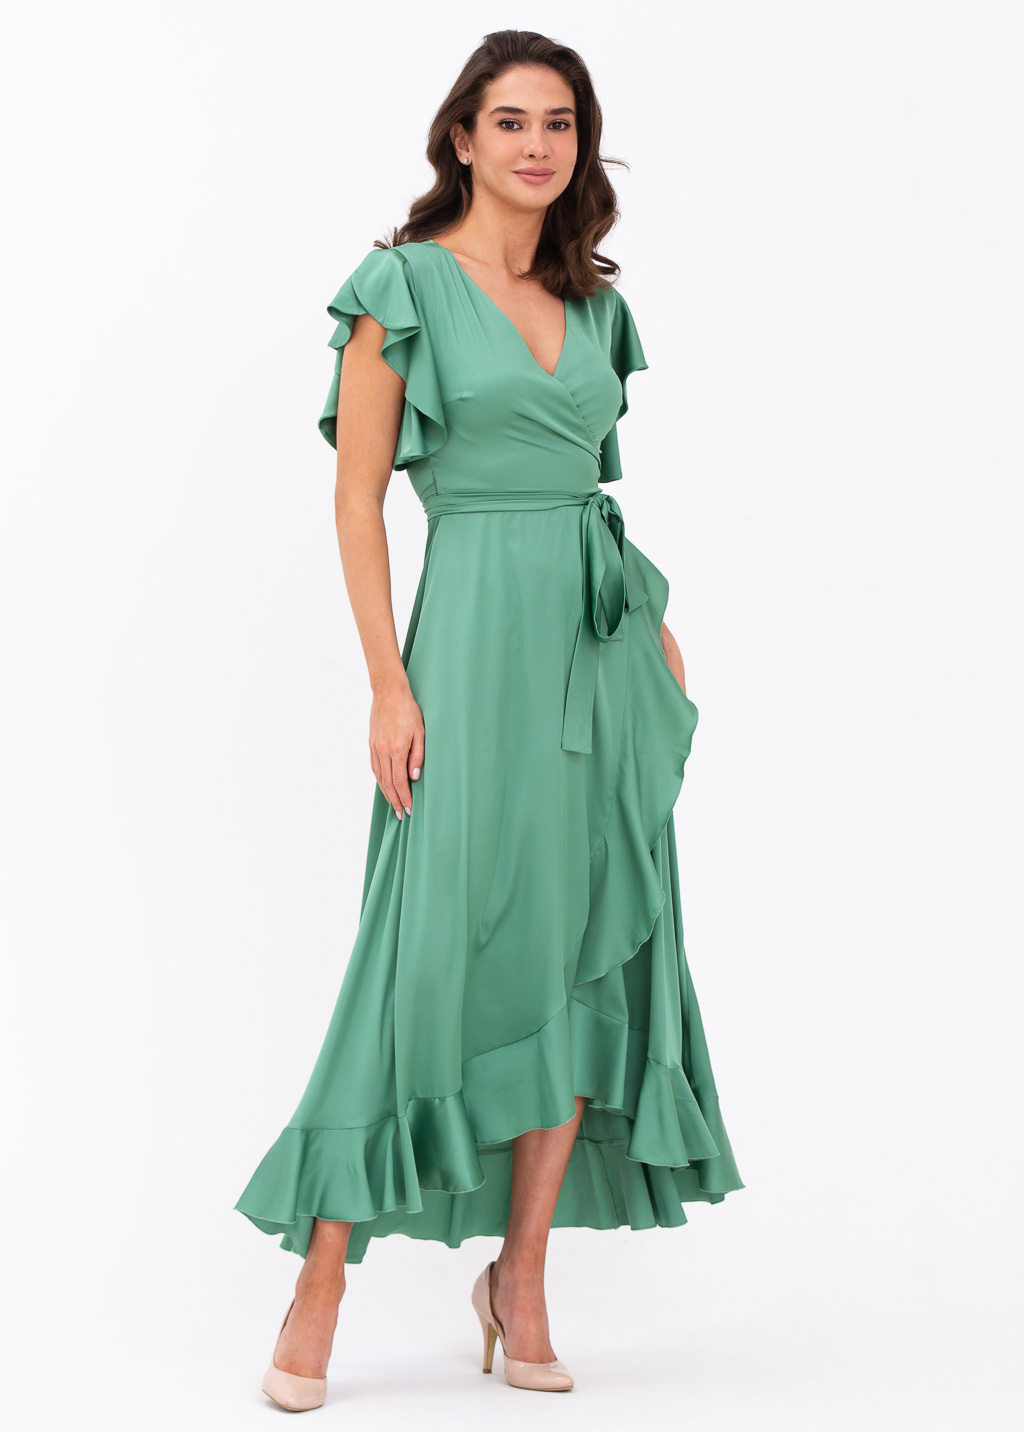 Olive green wrap dress